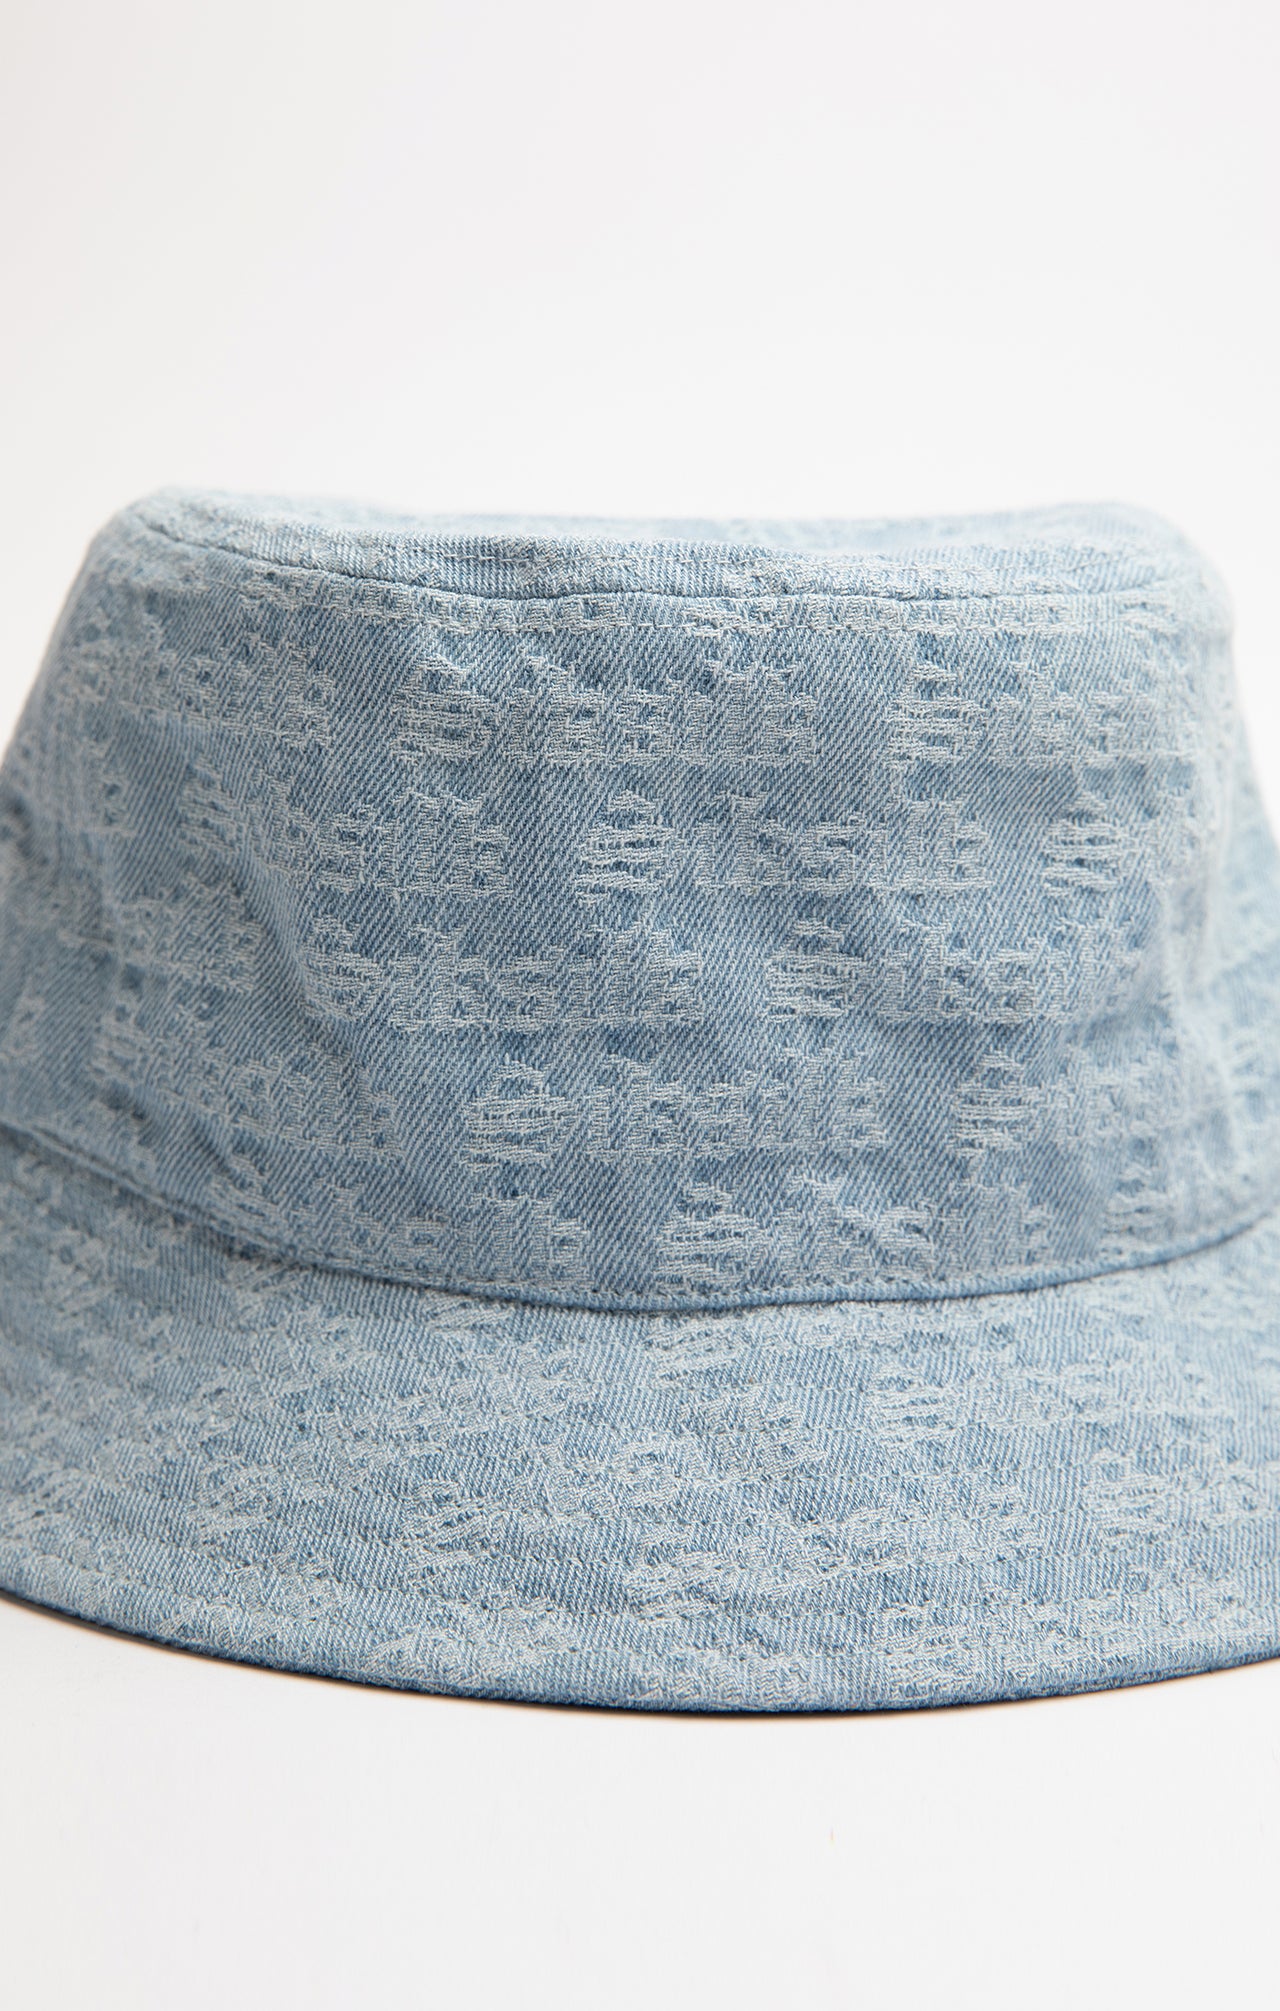 SikSilk Jacquard Denim Bucket Hat - Light Blue (3)